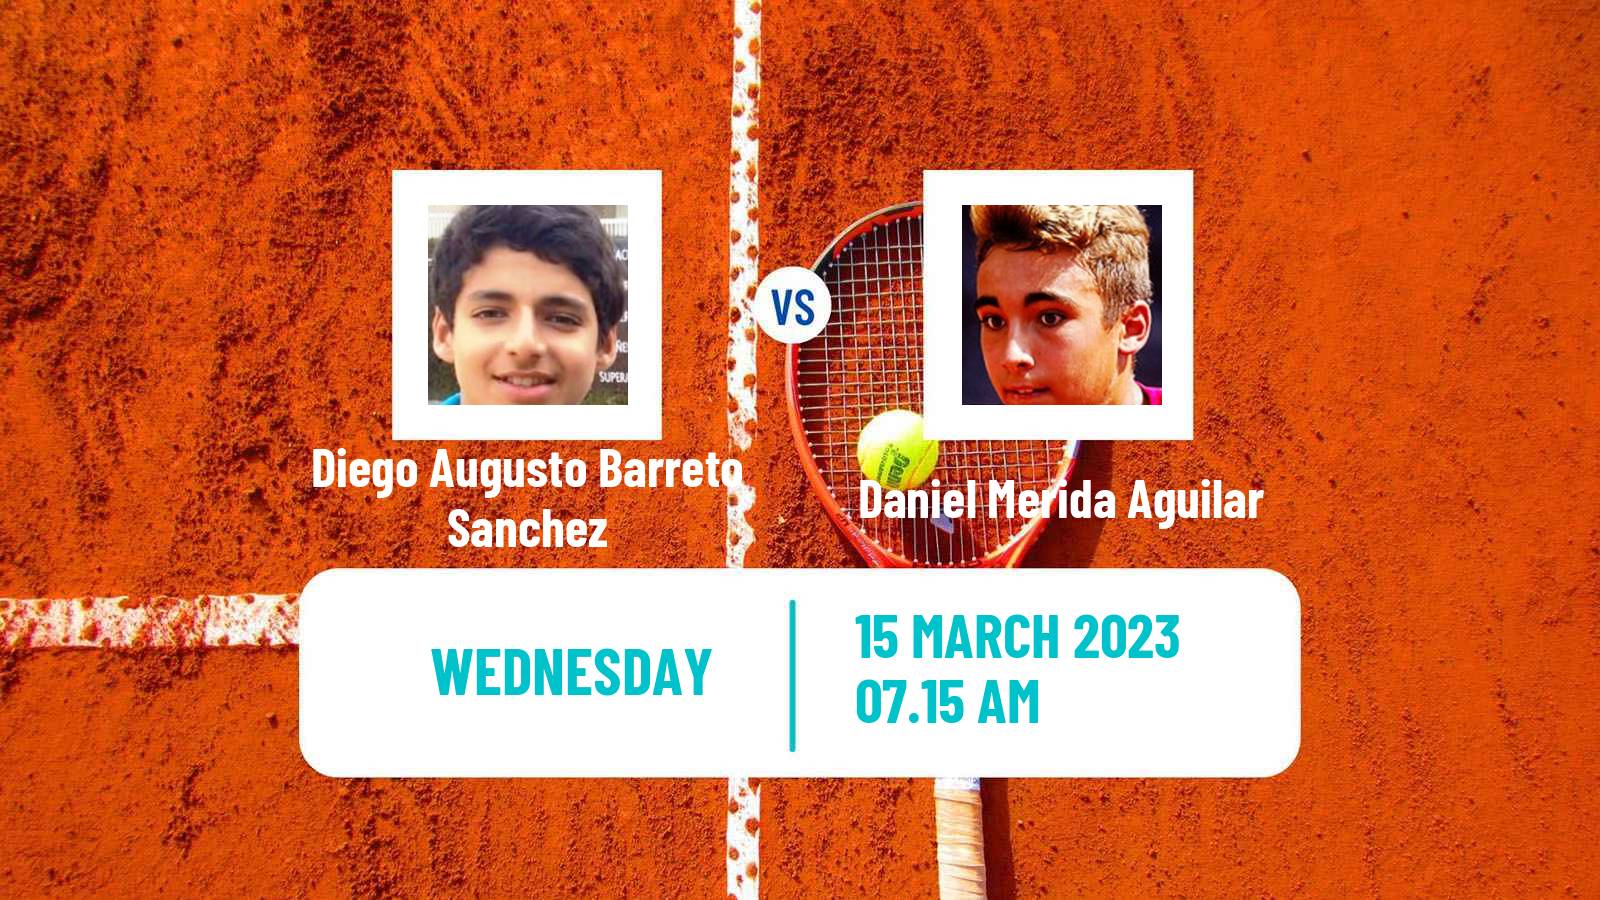 Tennis ITF Tournaments Diego Augusto Barreto Sanchez - Daniel Merida Aguilar